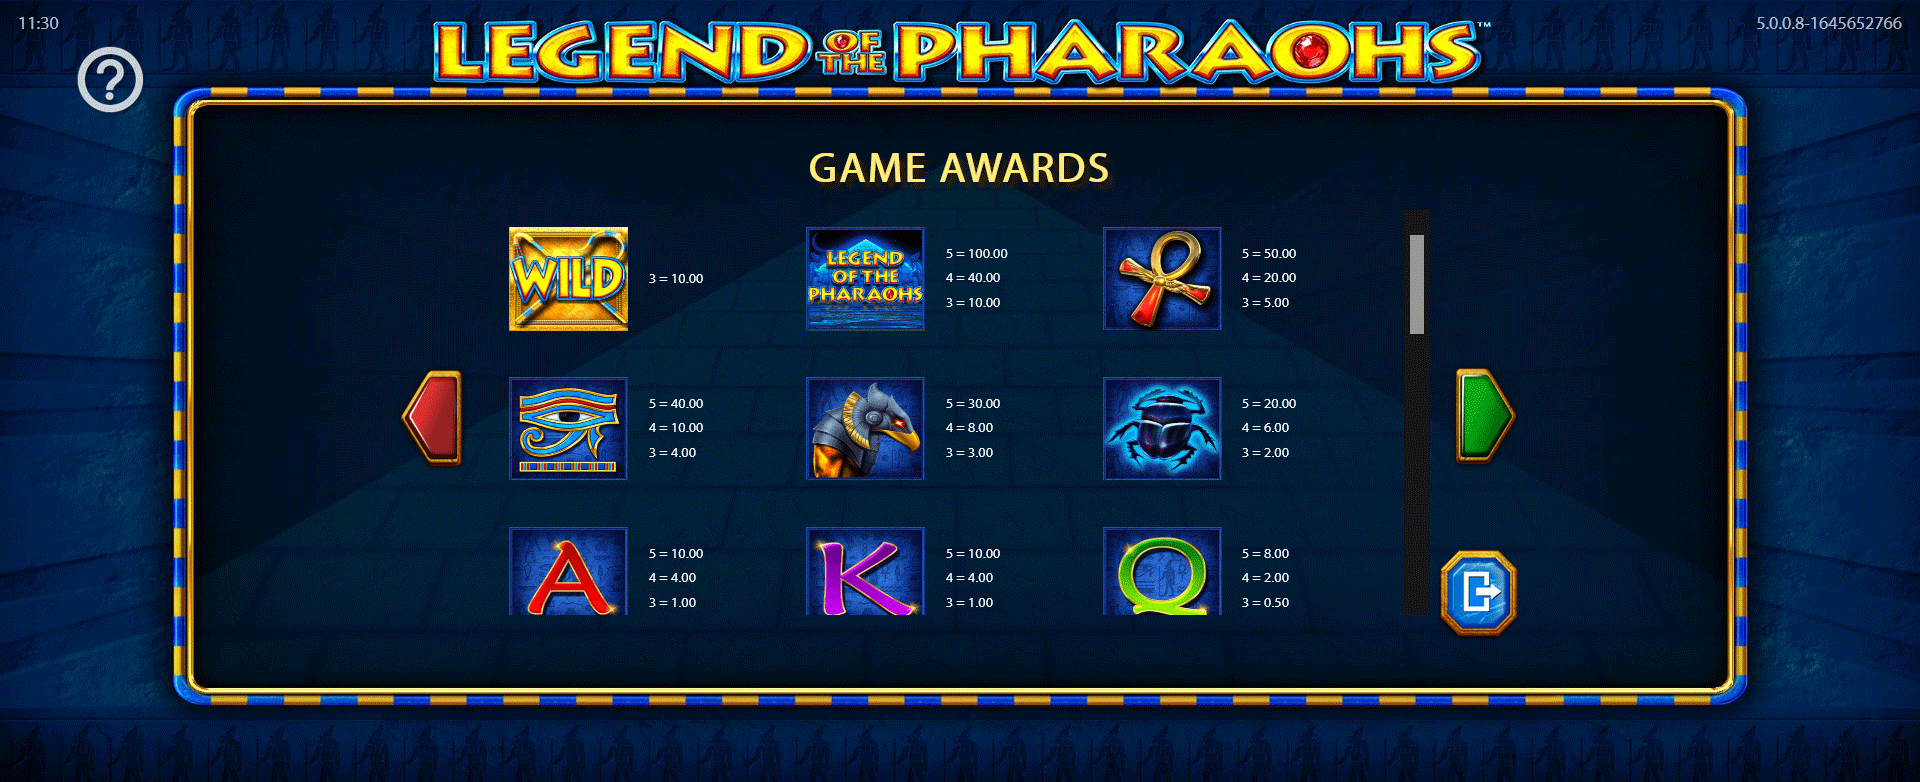 tabella dei simboli della slot machine legend of the pharaohs